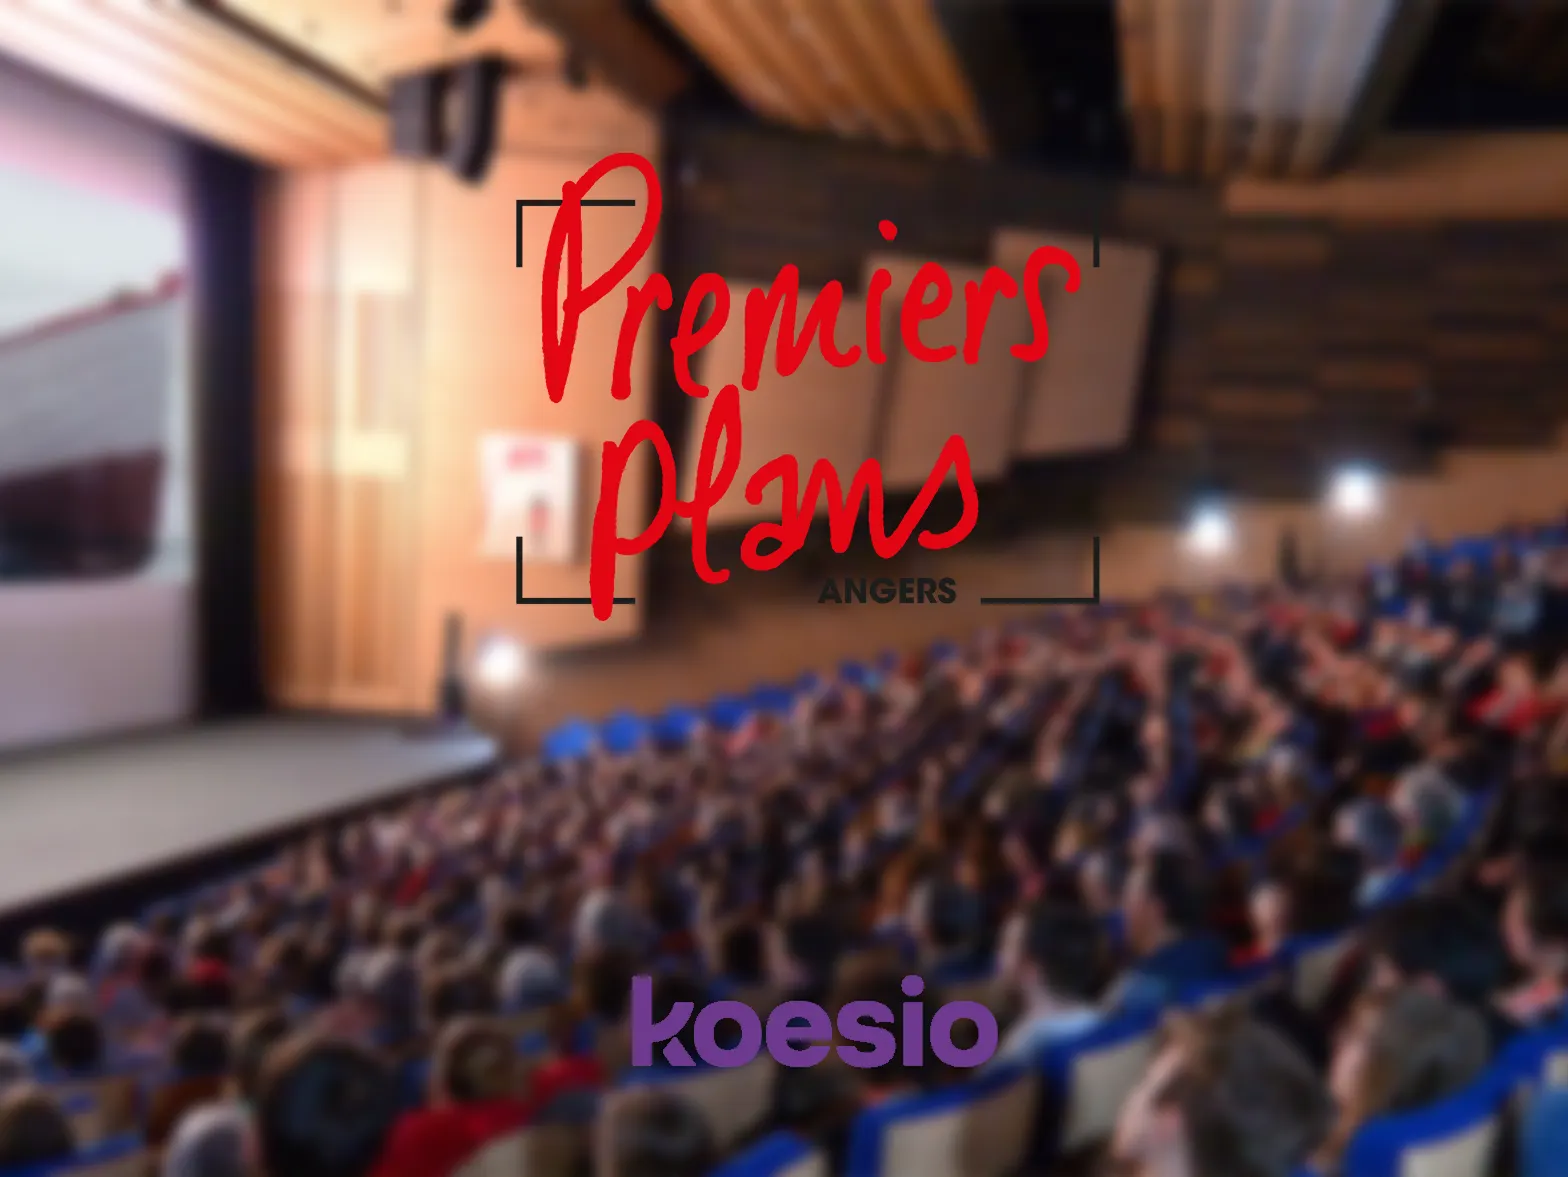 Antarius Avocats invitation par Koesio au festival Premiers Plan